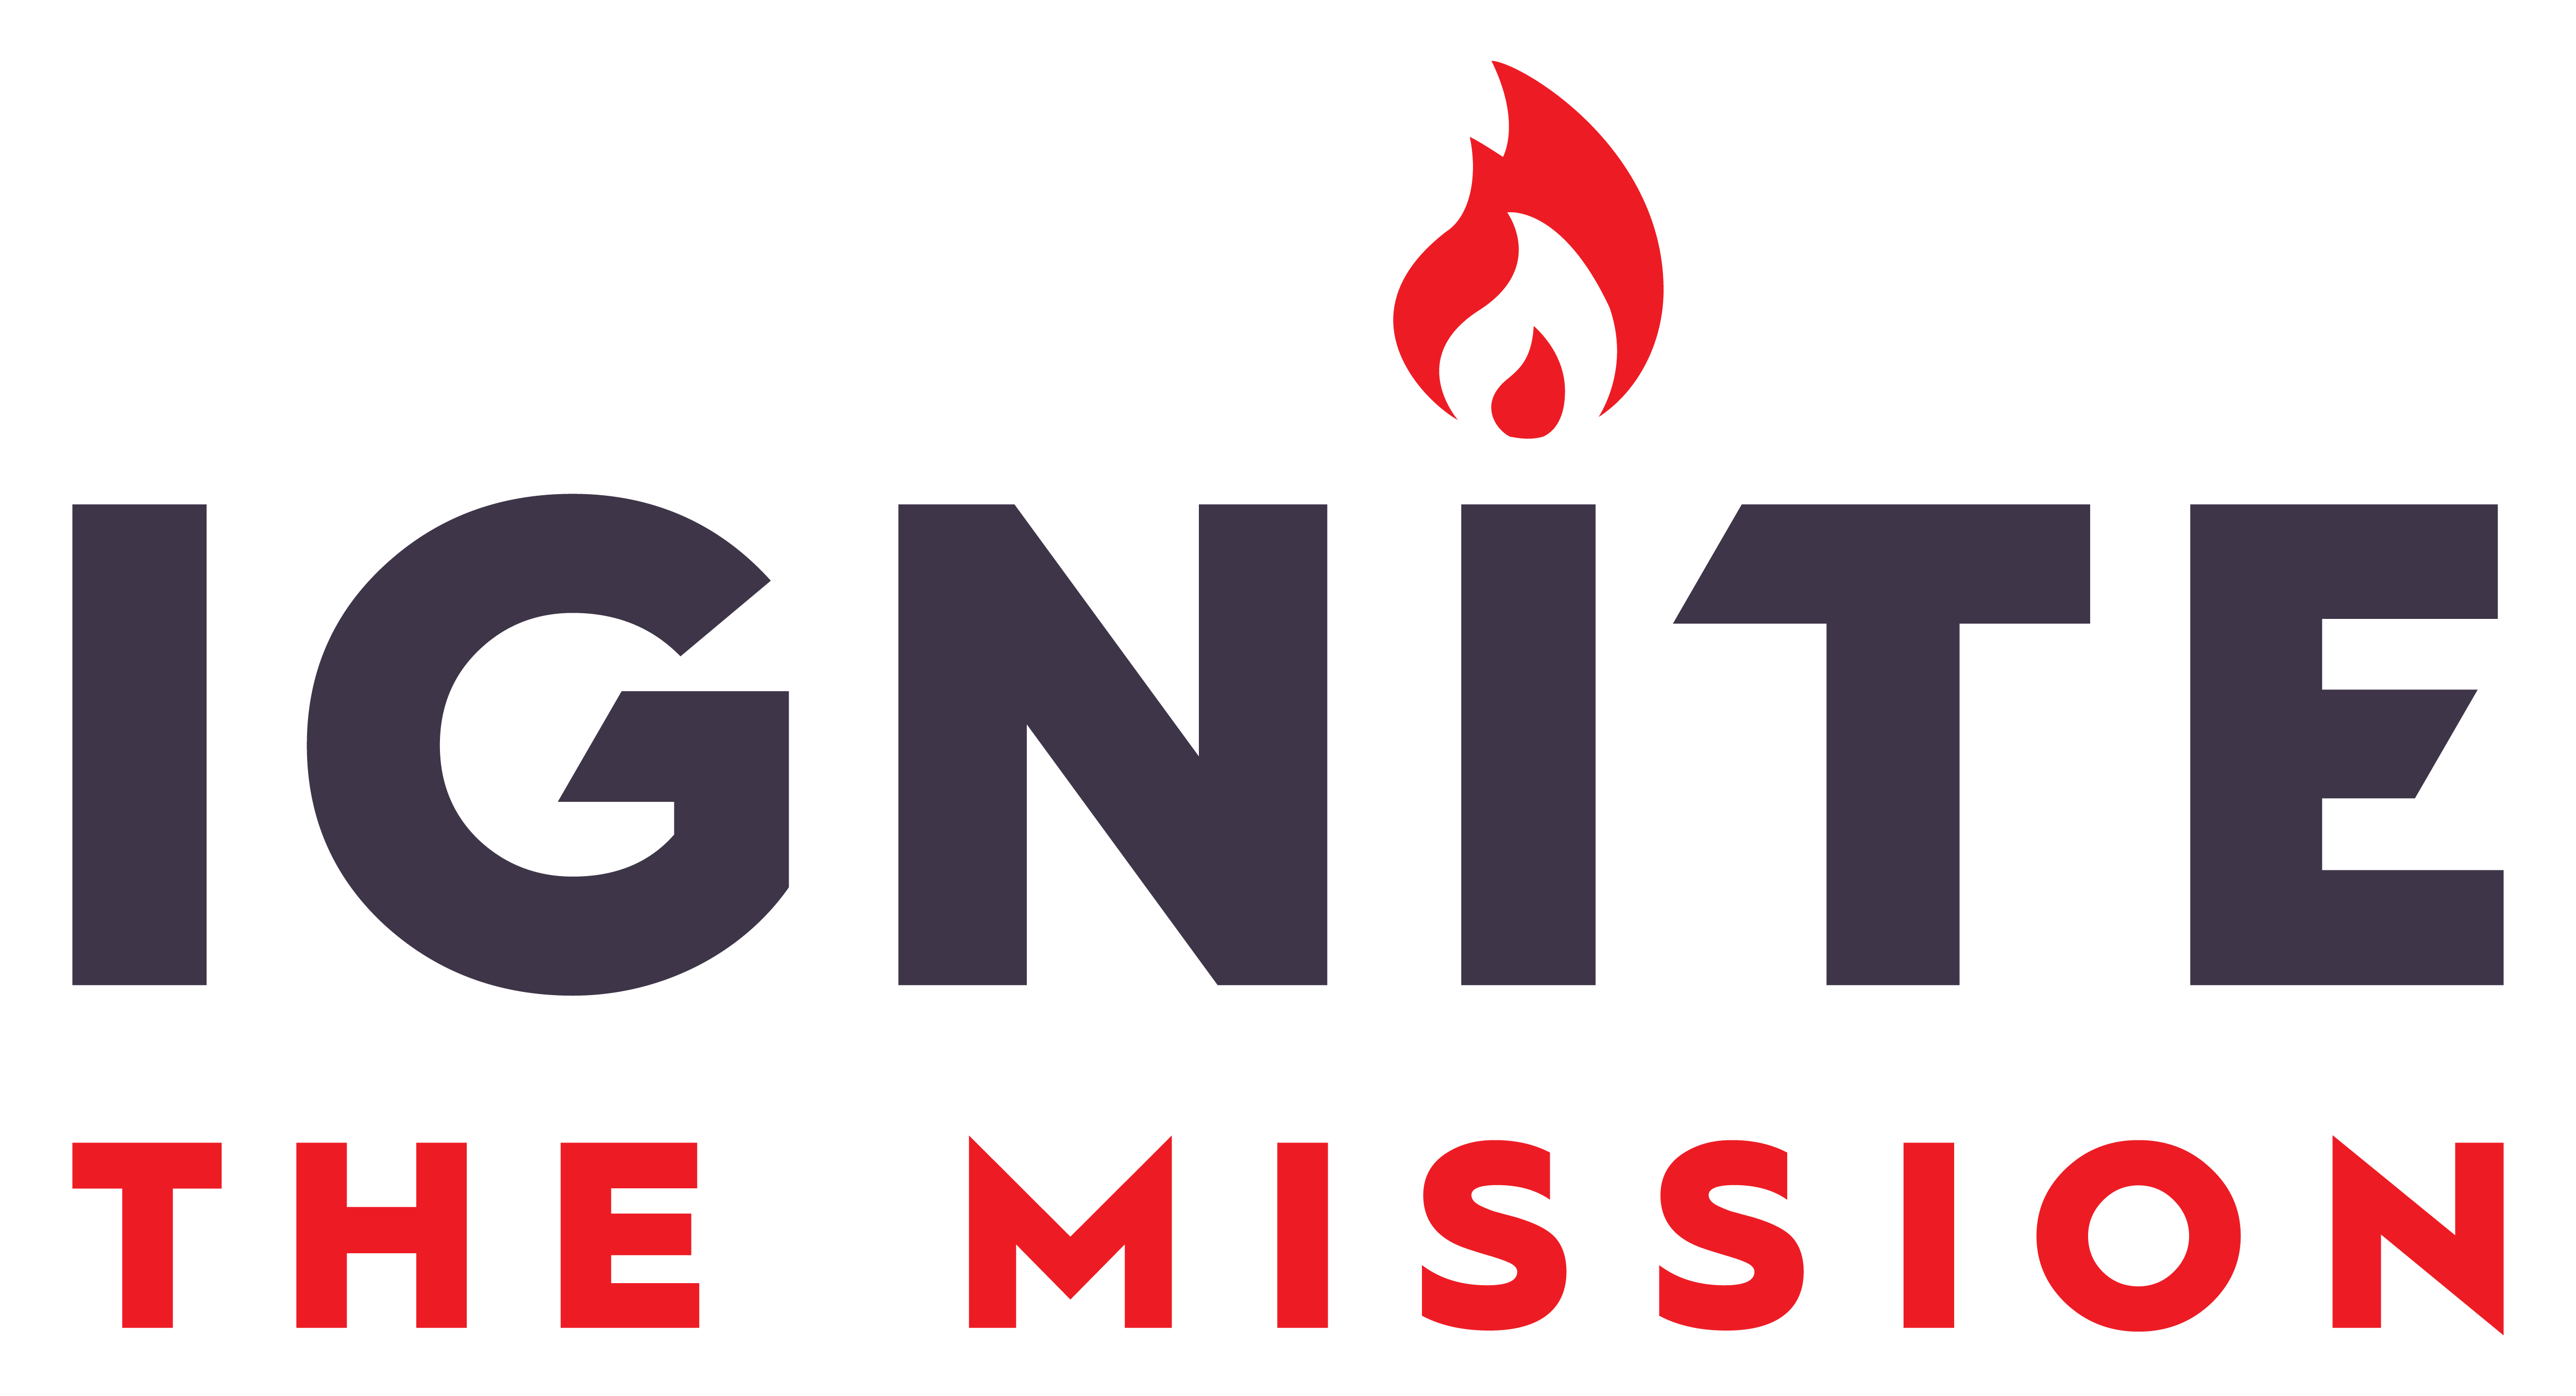 Mission Logo - Ignite the Mission